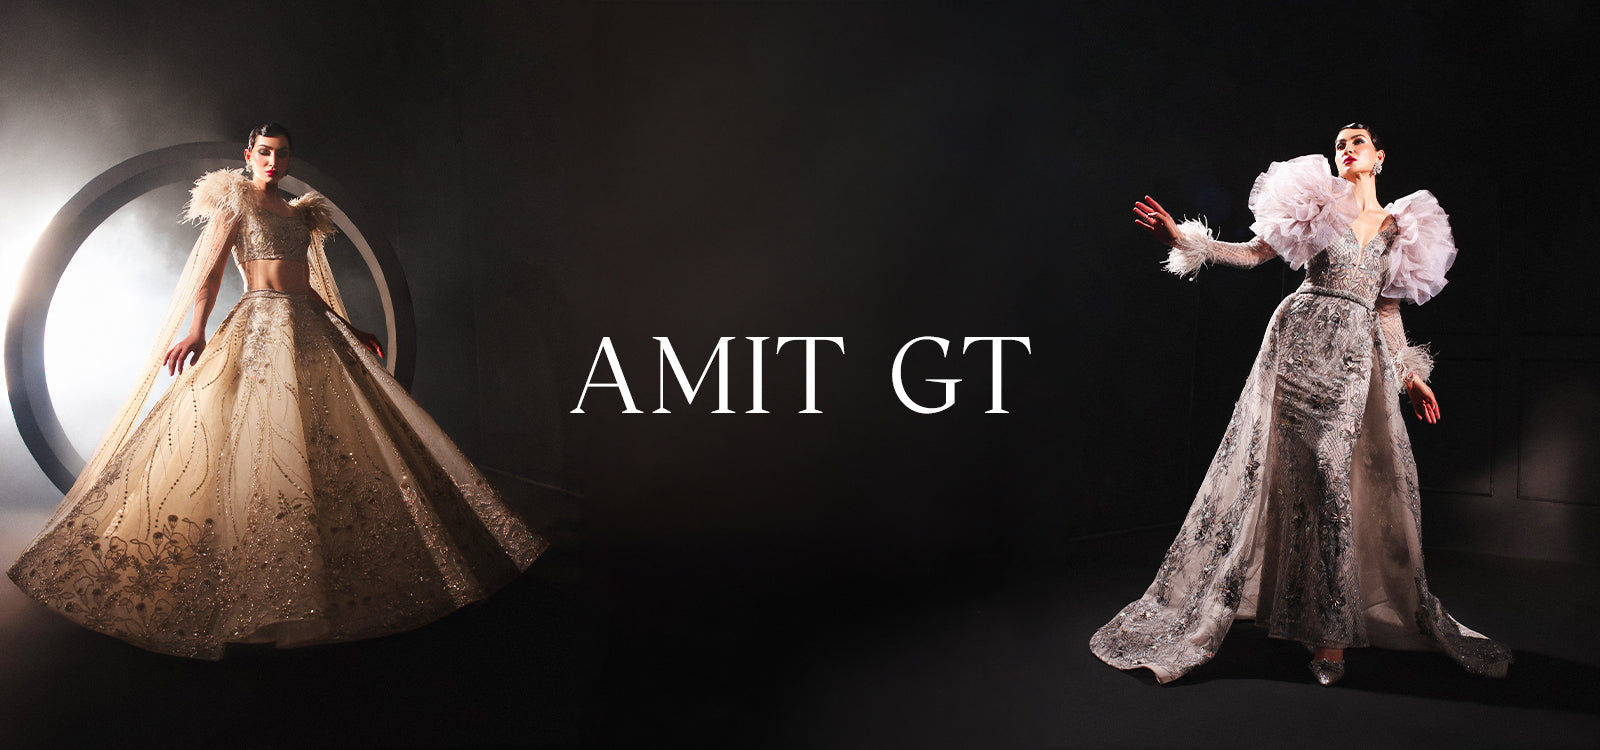 AMIT GT